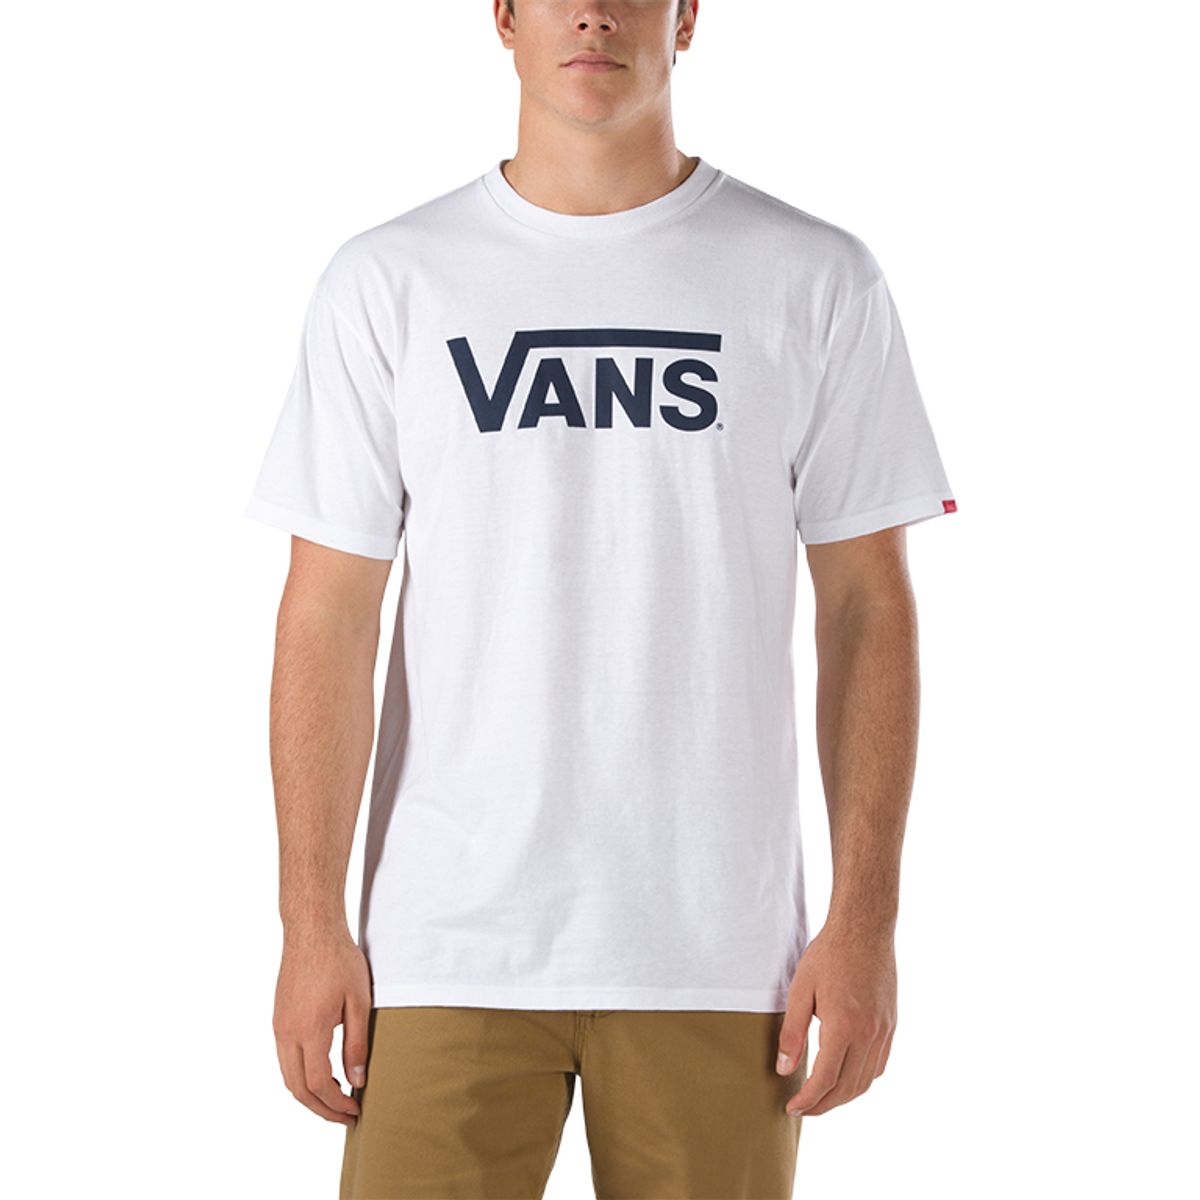 Compra Camiseta Manga Corta Blanca Vans Hombre en Vans Colombia Tienda Oficial Vans